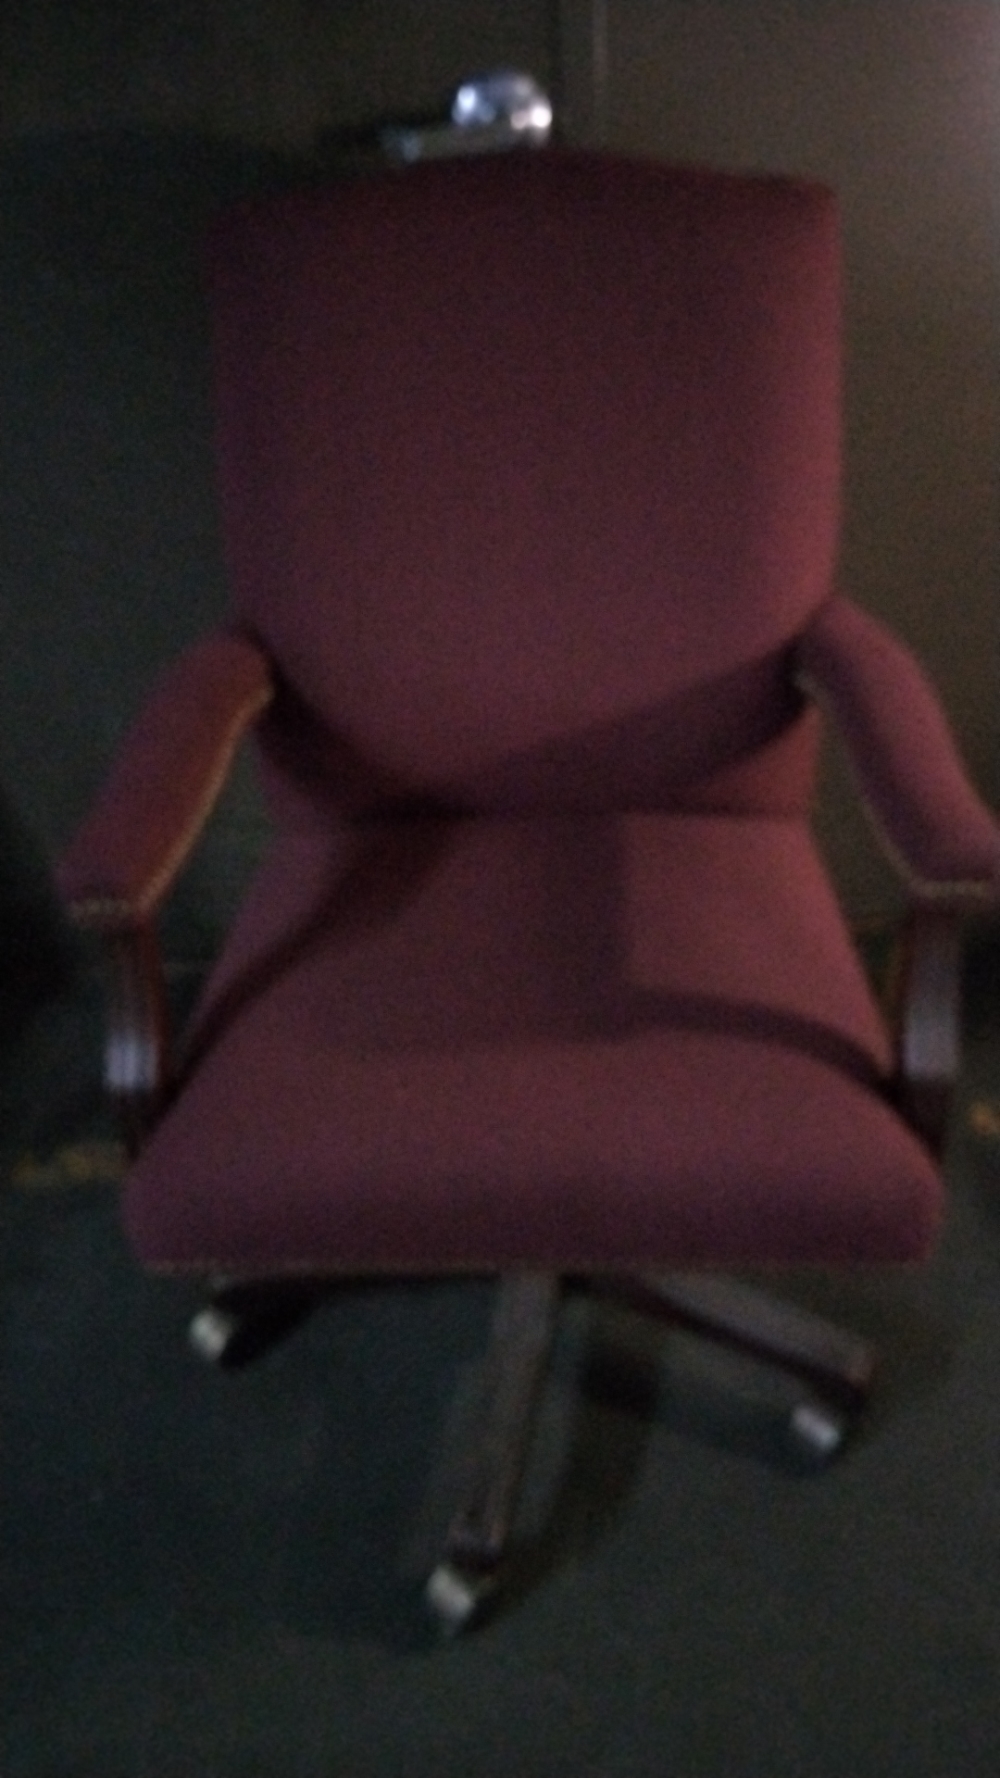  Task Chair